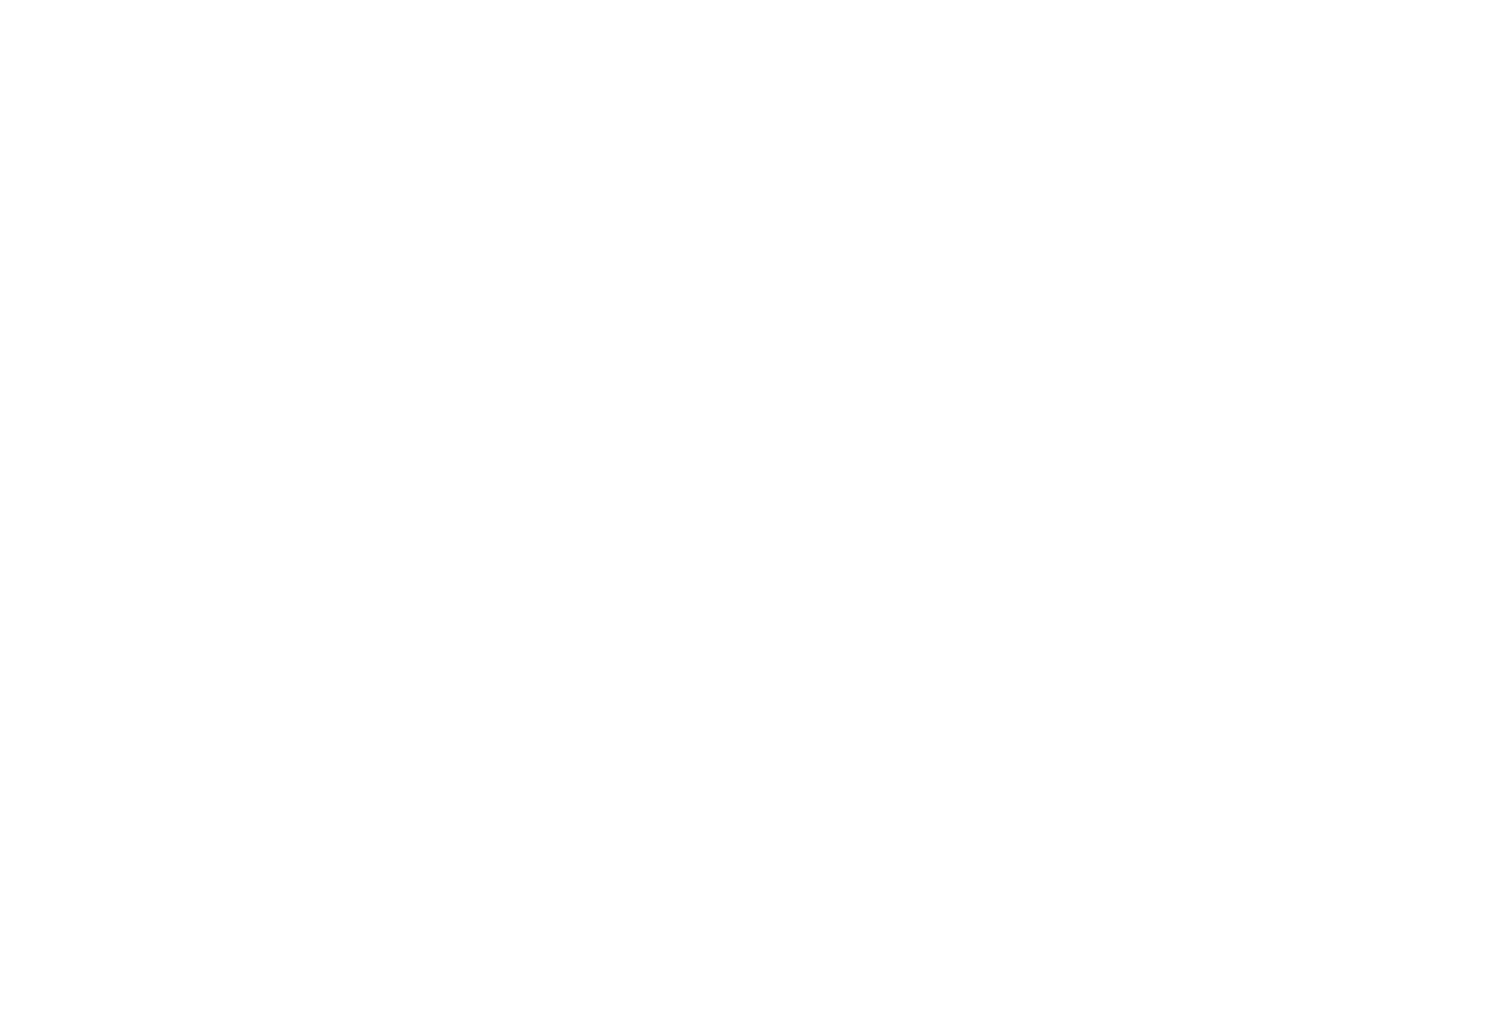 Gaiser Bee Co.